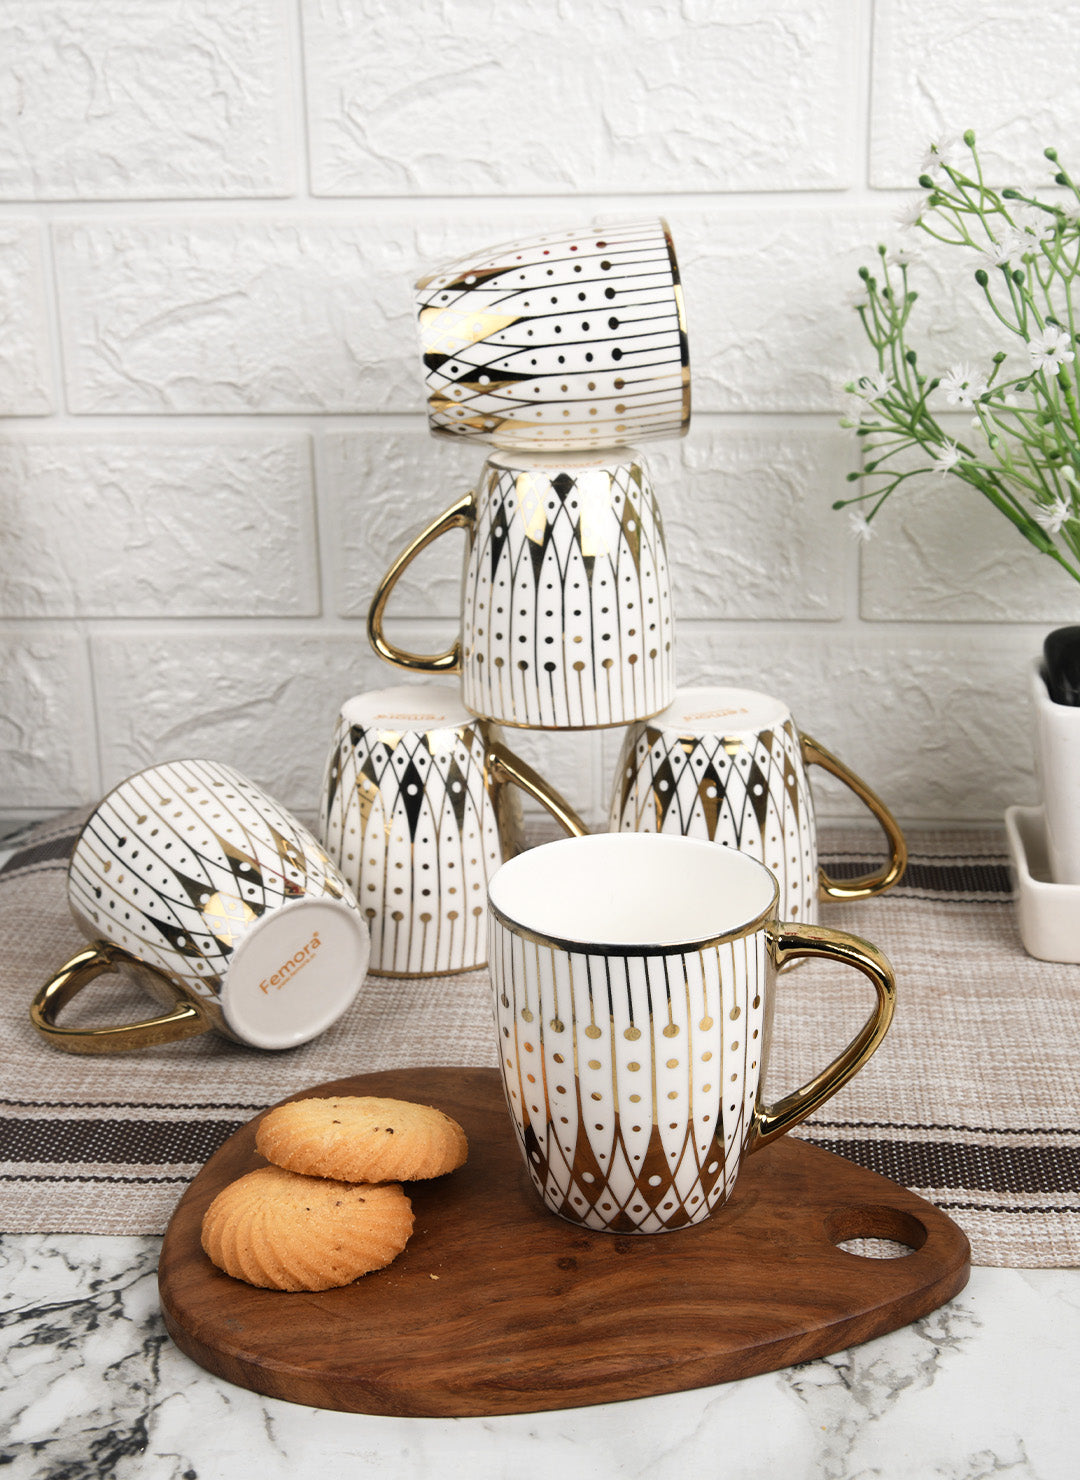 Premium Ceramic Gold Modern Pattern Coffee & Tea Cup Set of 6, 160 ML, Femora